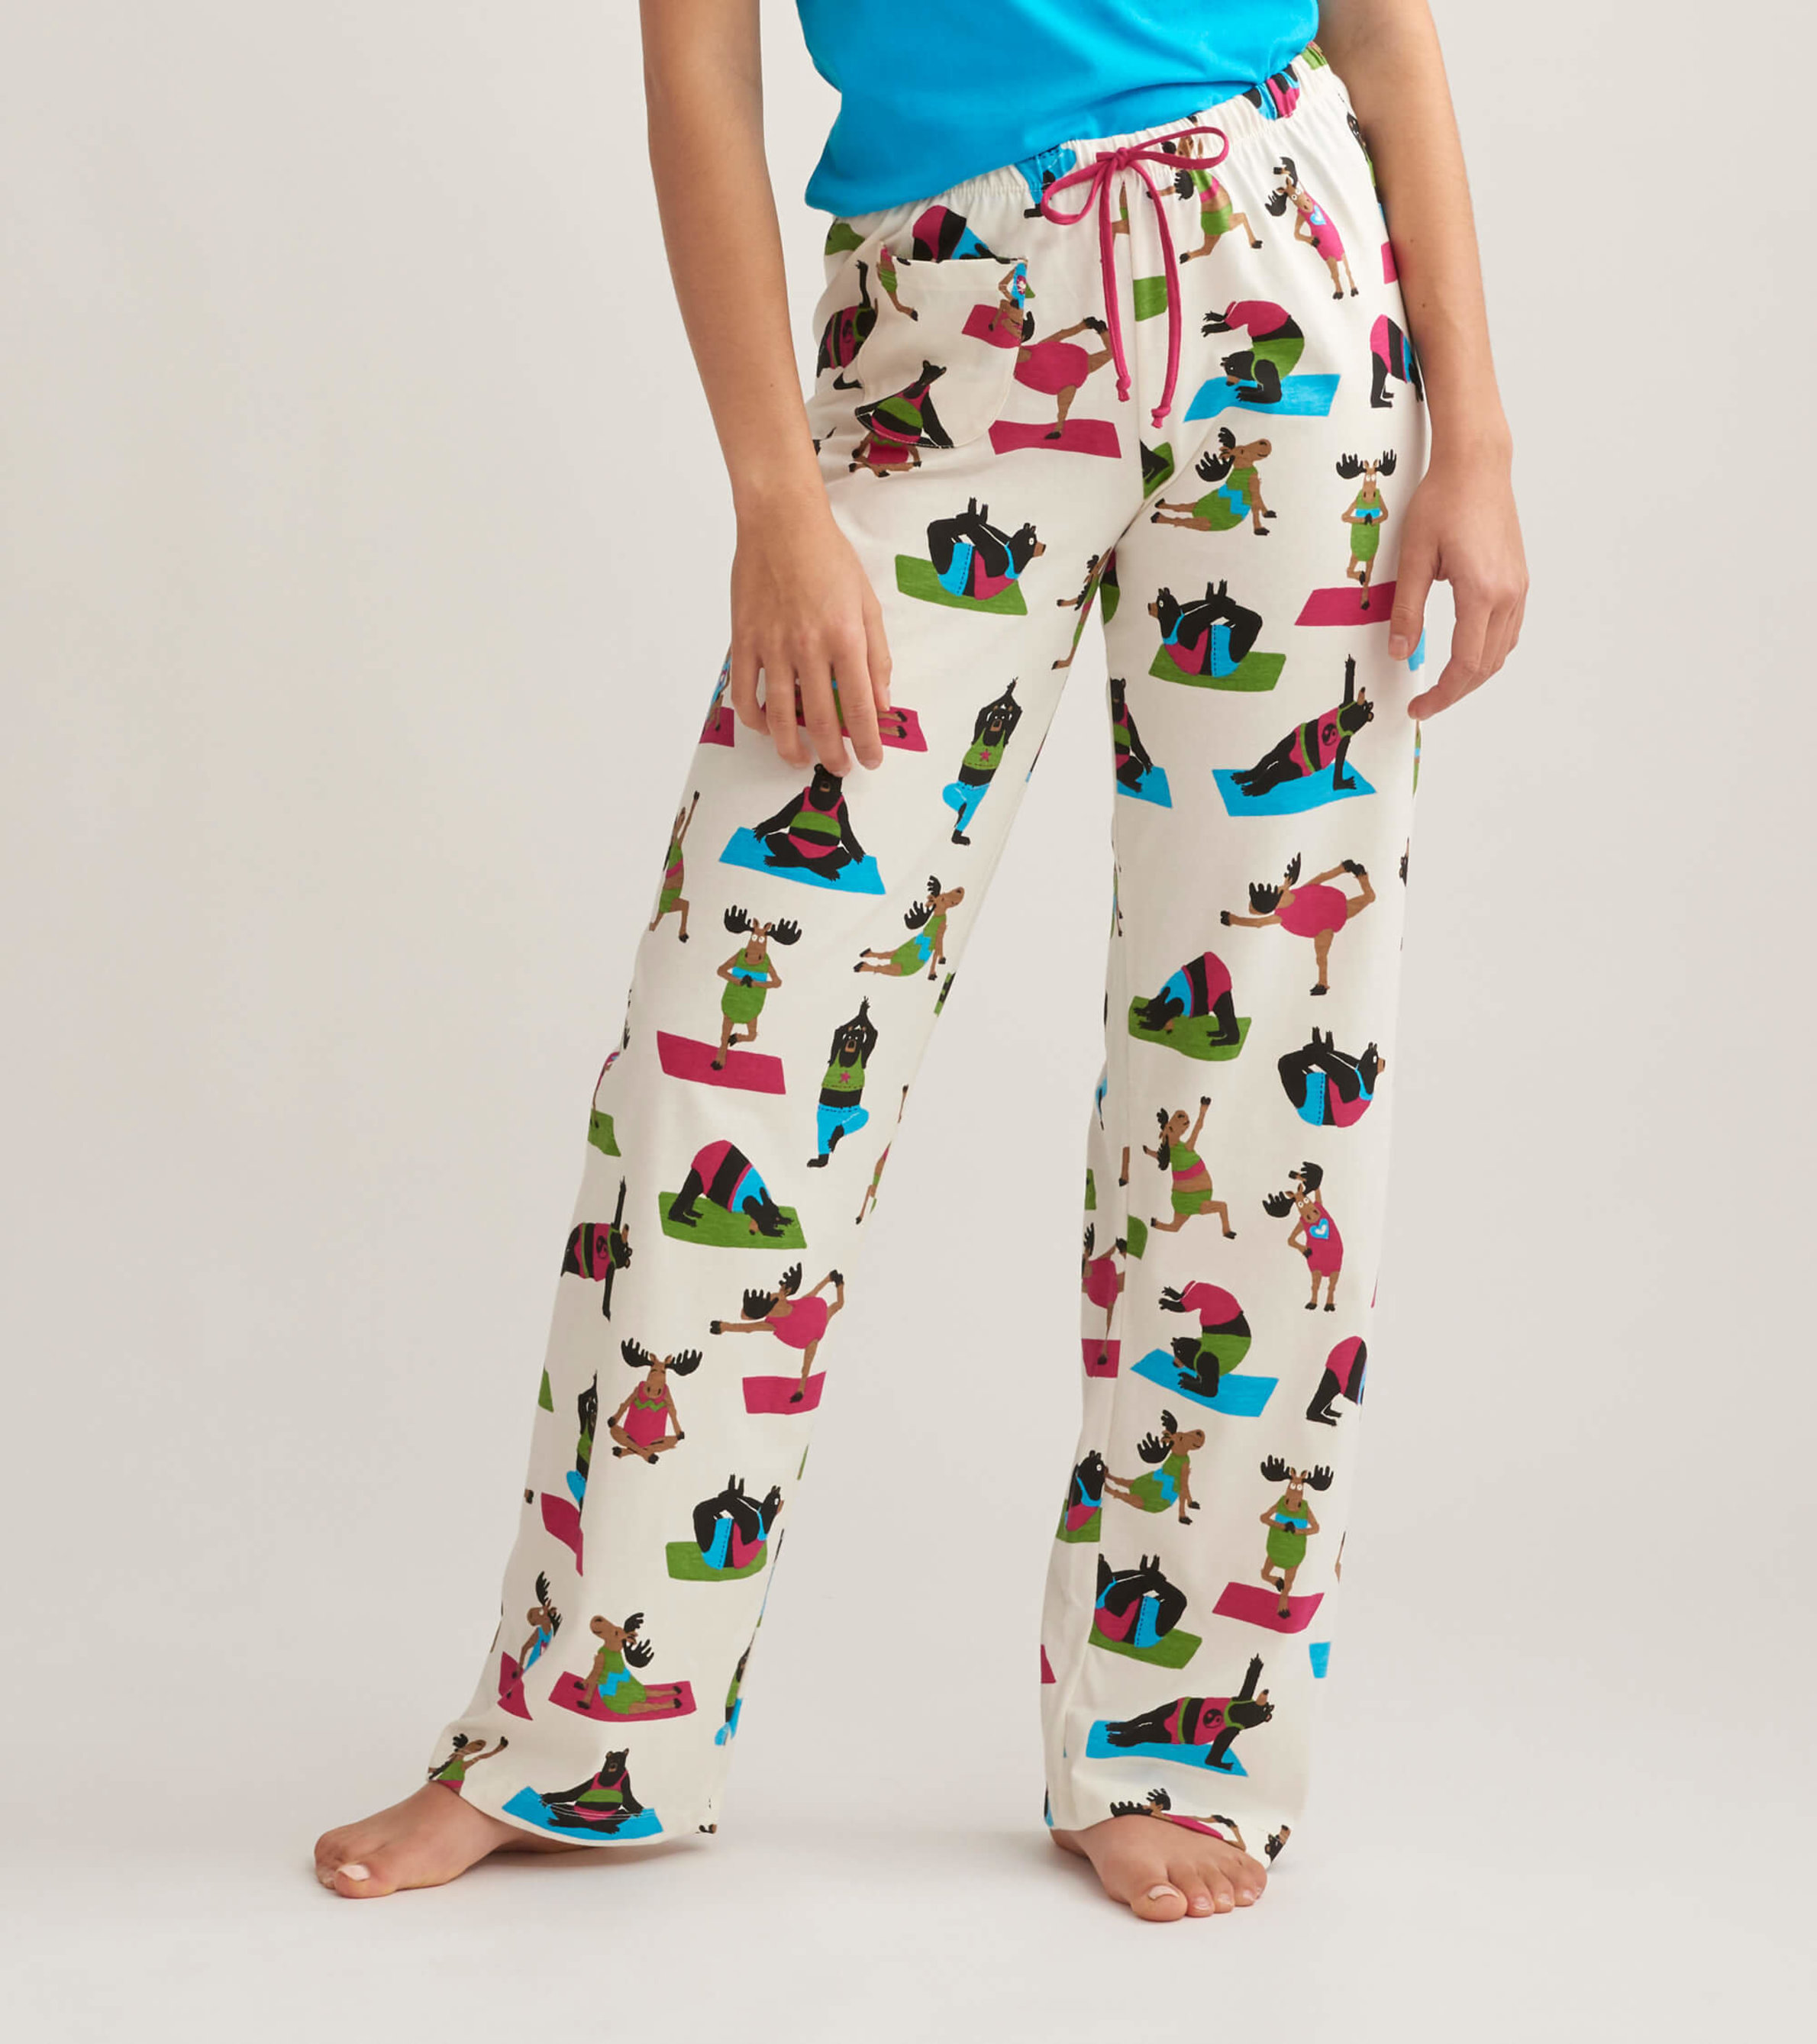 Yoga Bear Knit Women's Jersey Pajama Pants - Little Blue House US